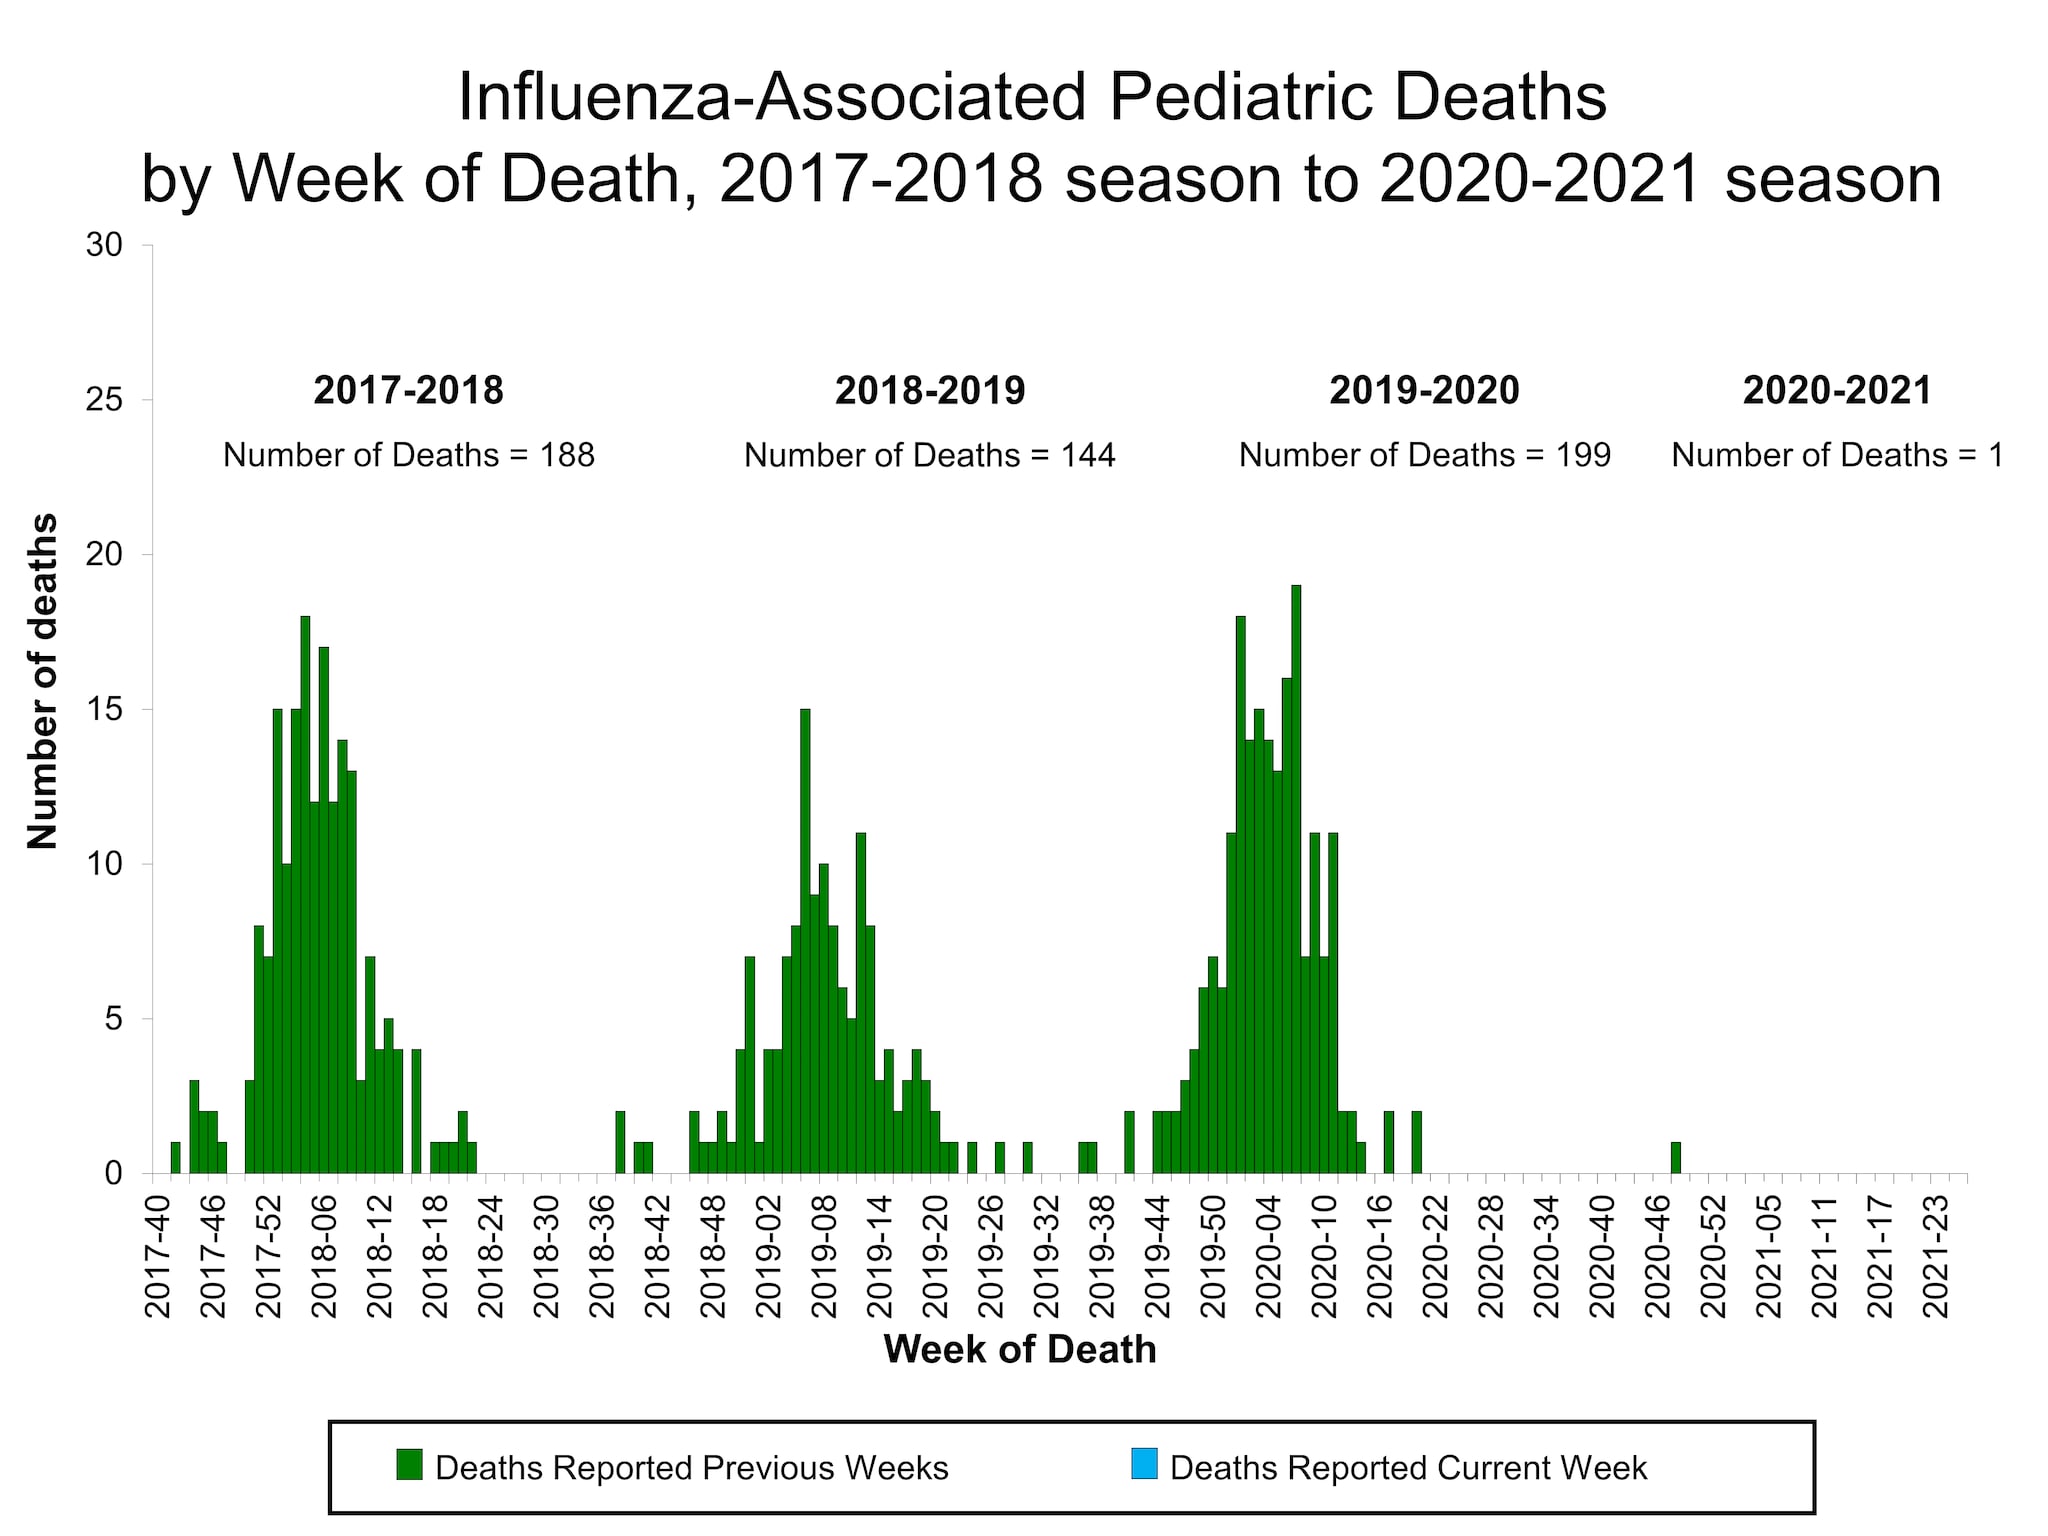 Number of InfluenzaAssociated Pediatric Deaths